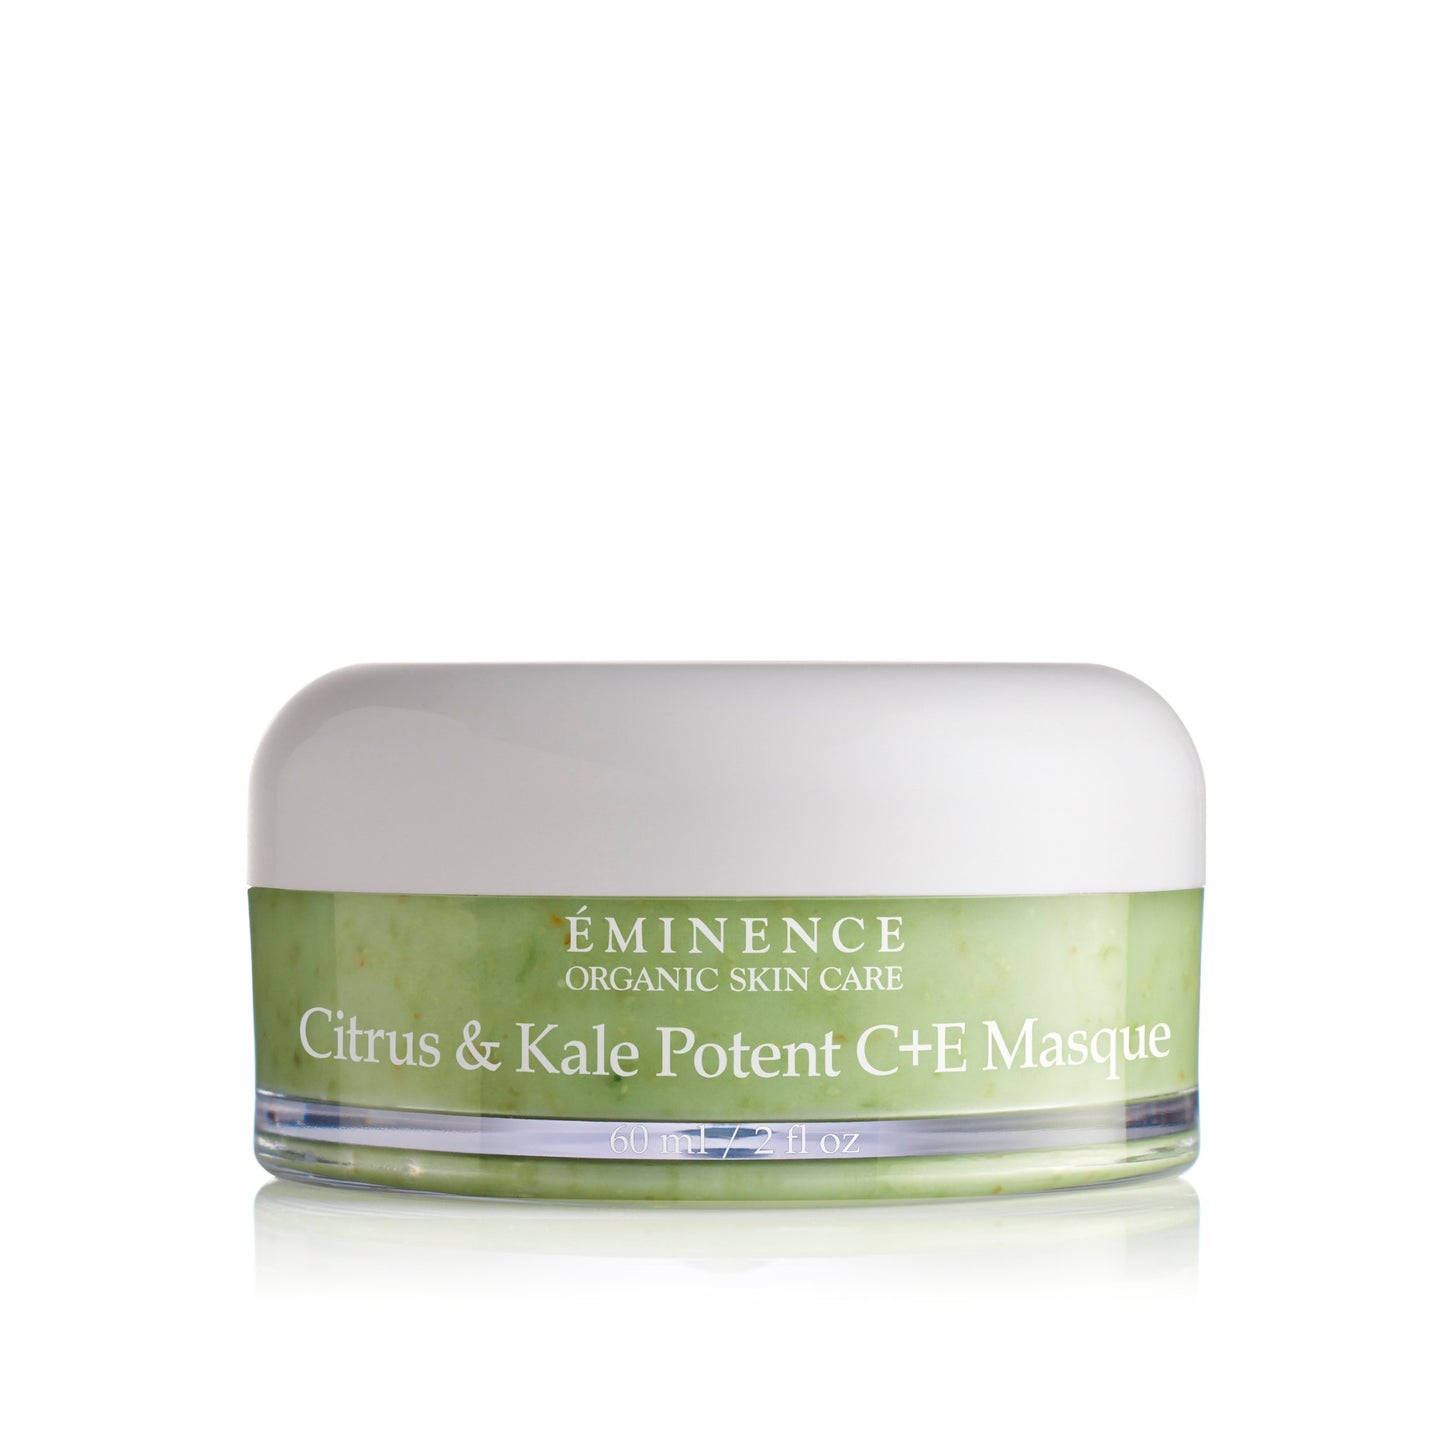 Eminence Organics - Eminence Citrus and Kale Potent C+E Masque - ORESTA clean beauty simplified